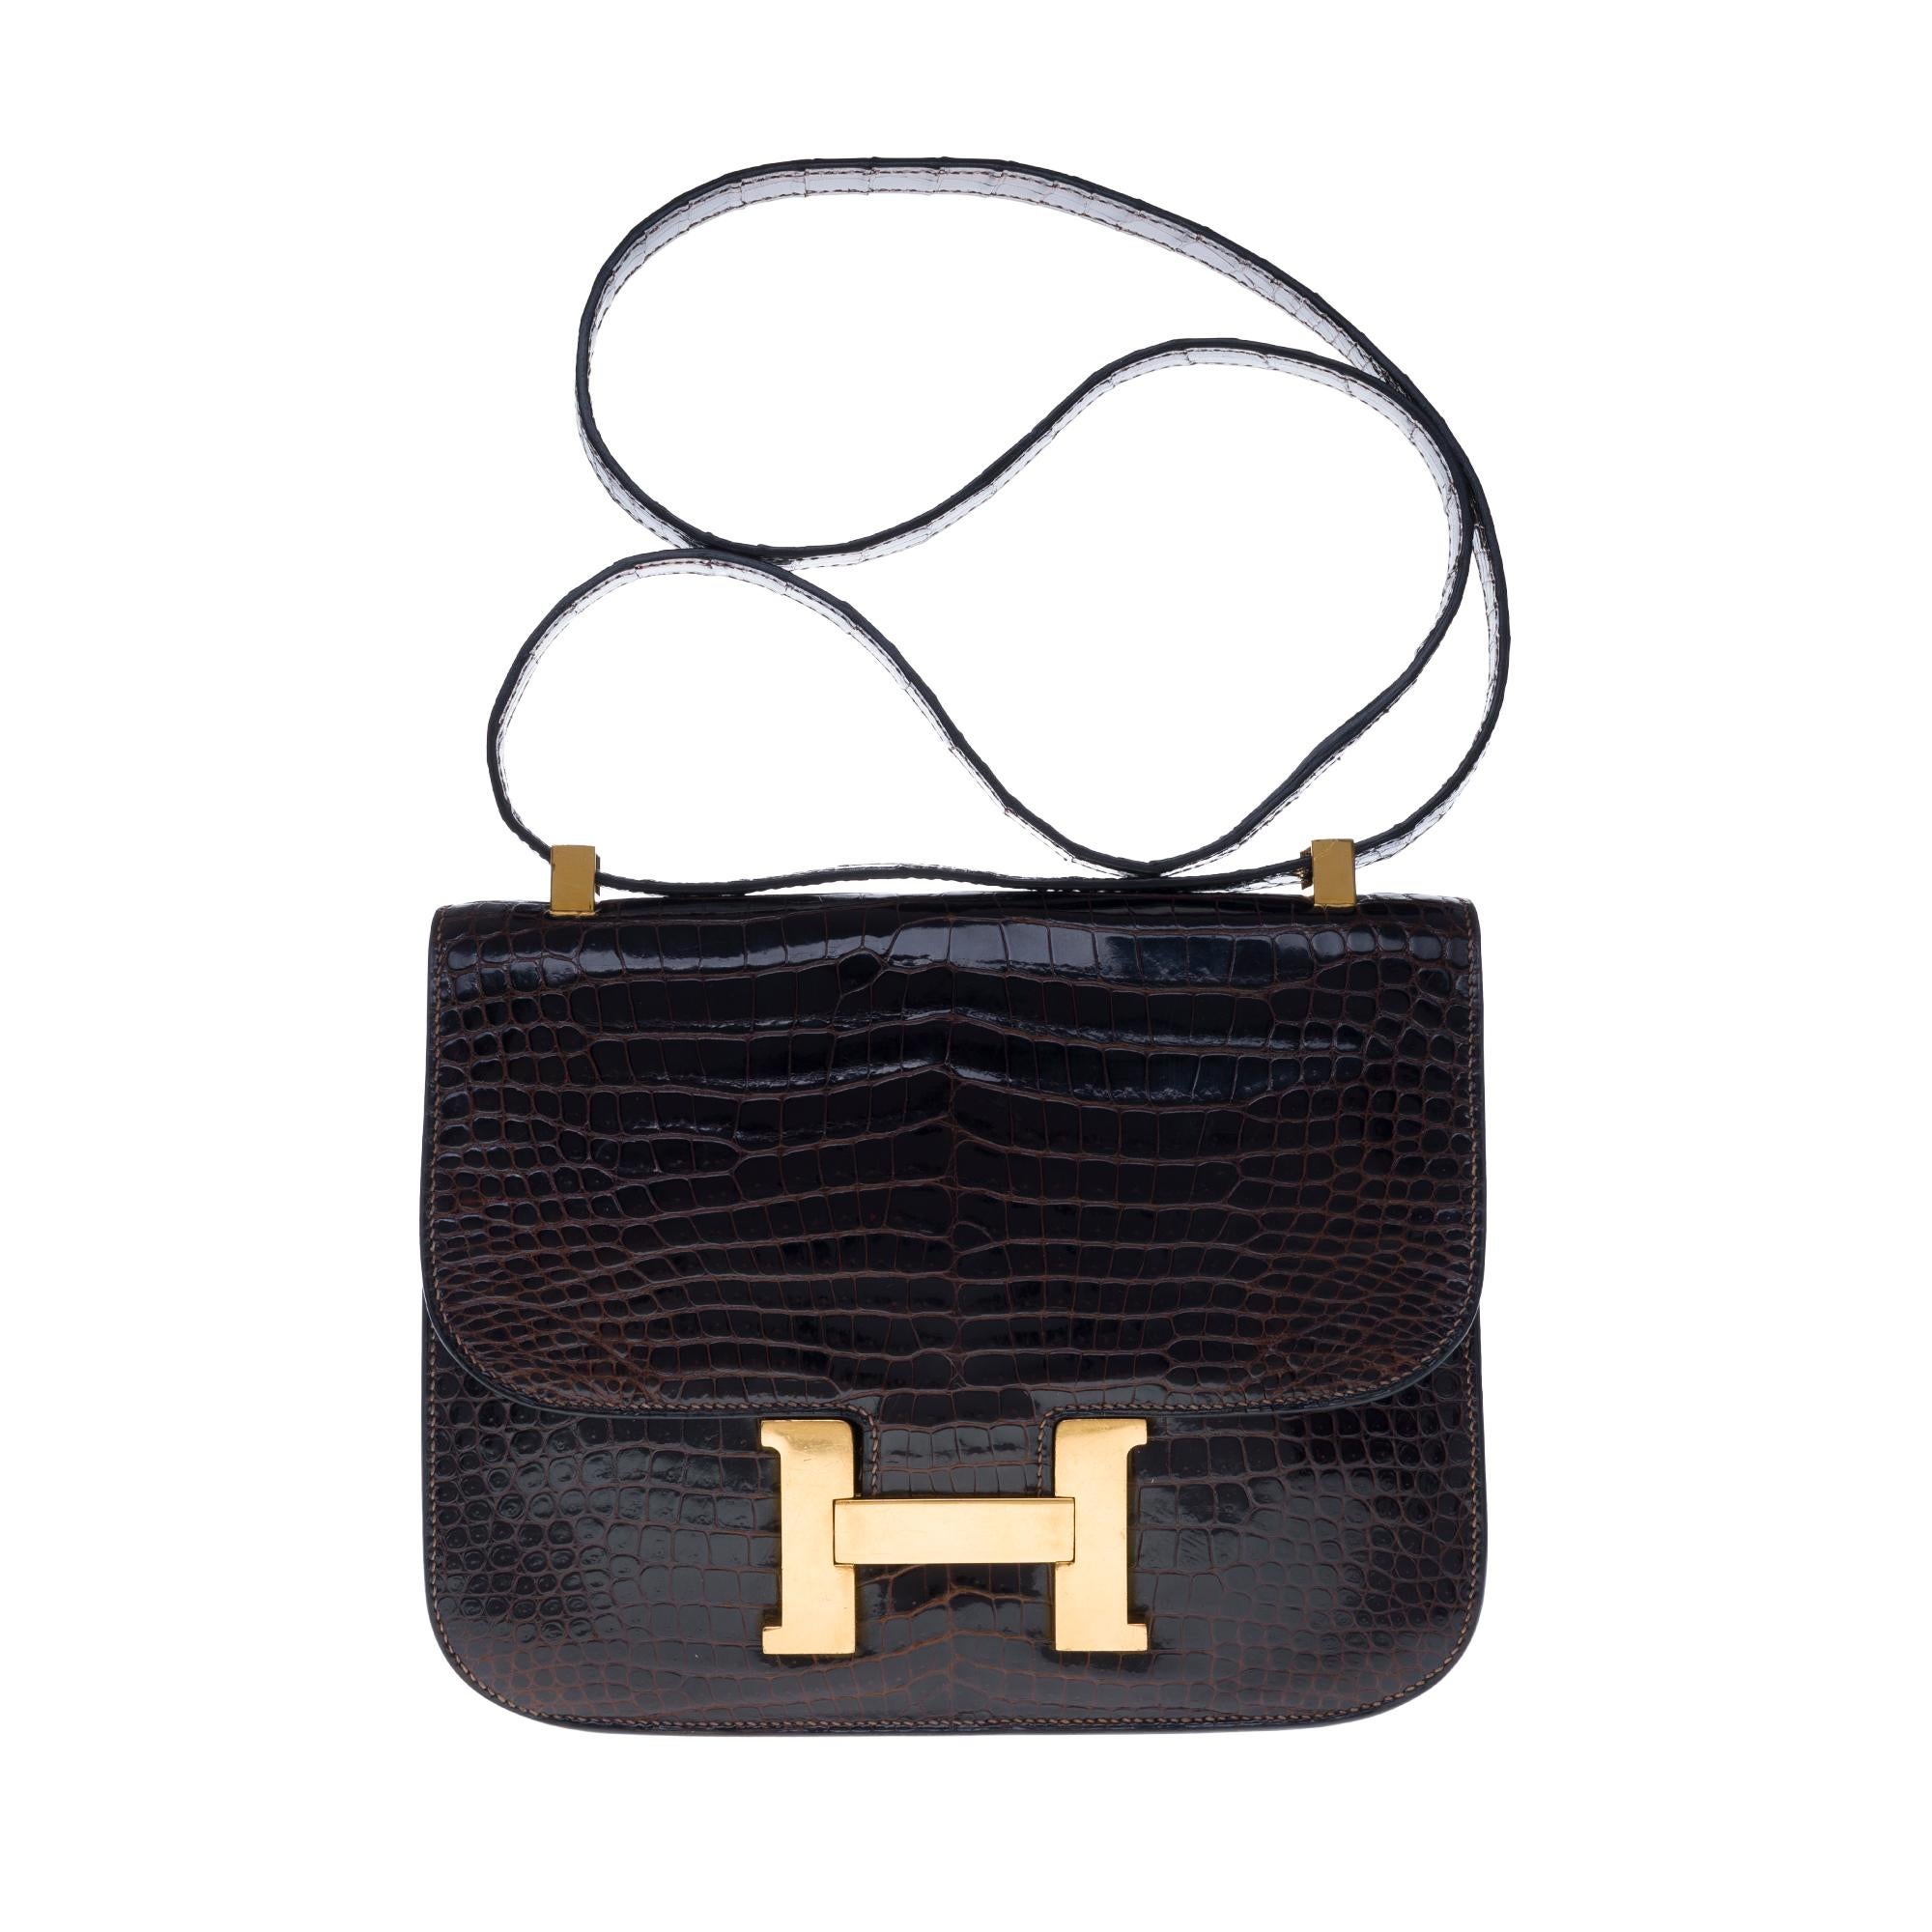 Stunning Hermès Constance shoulder bag in brown crocodile and gold hardware